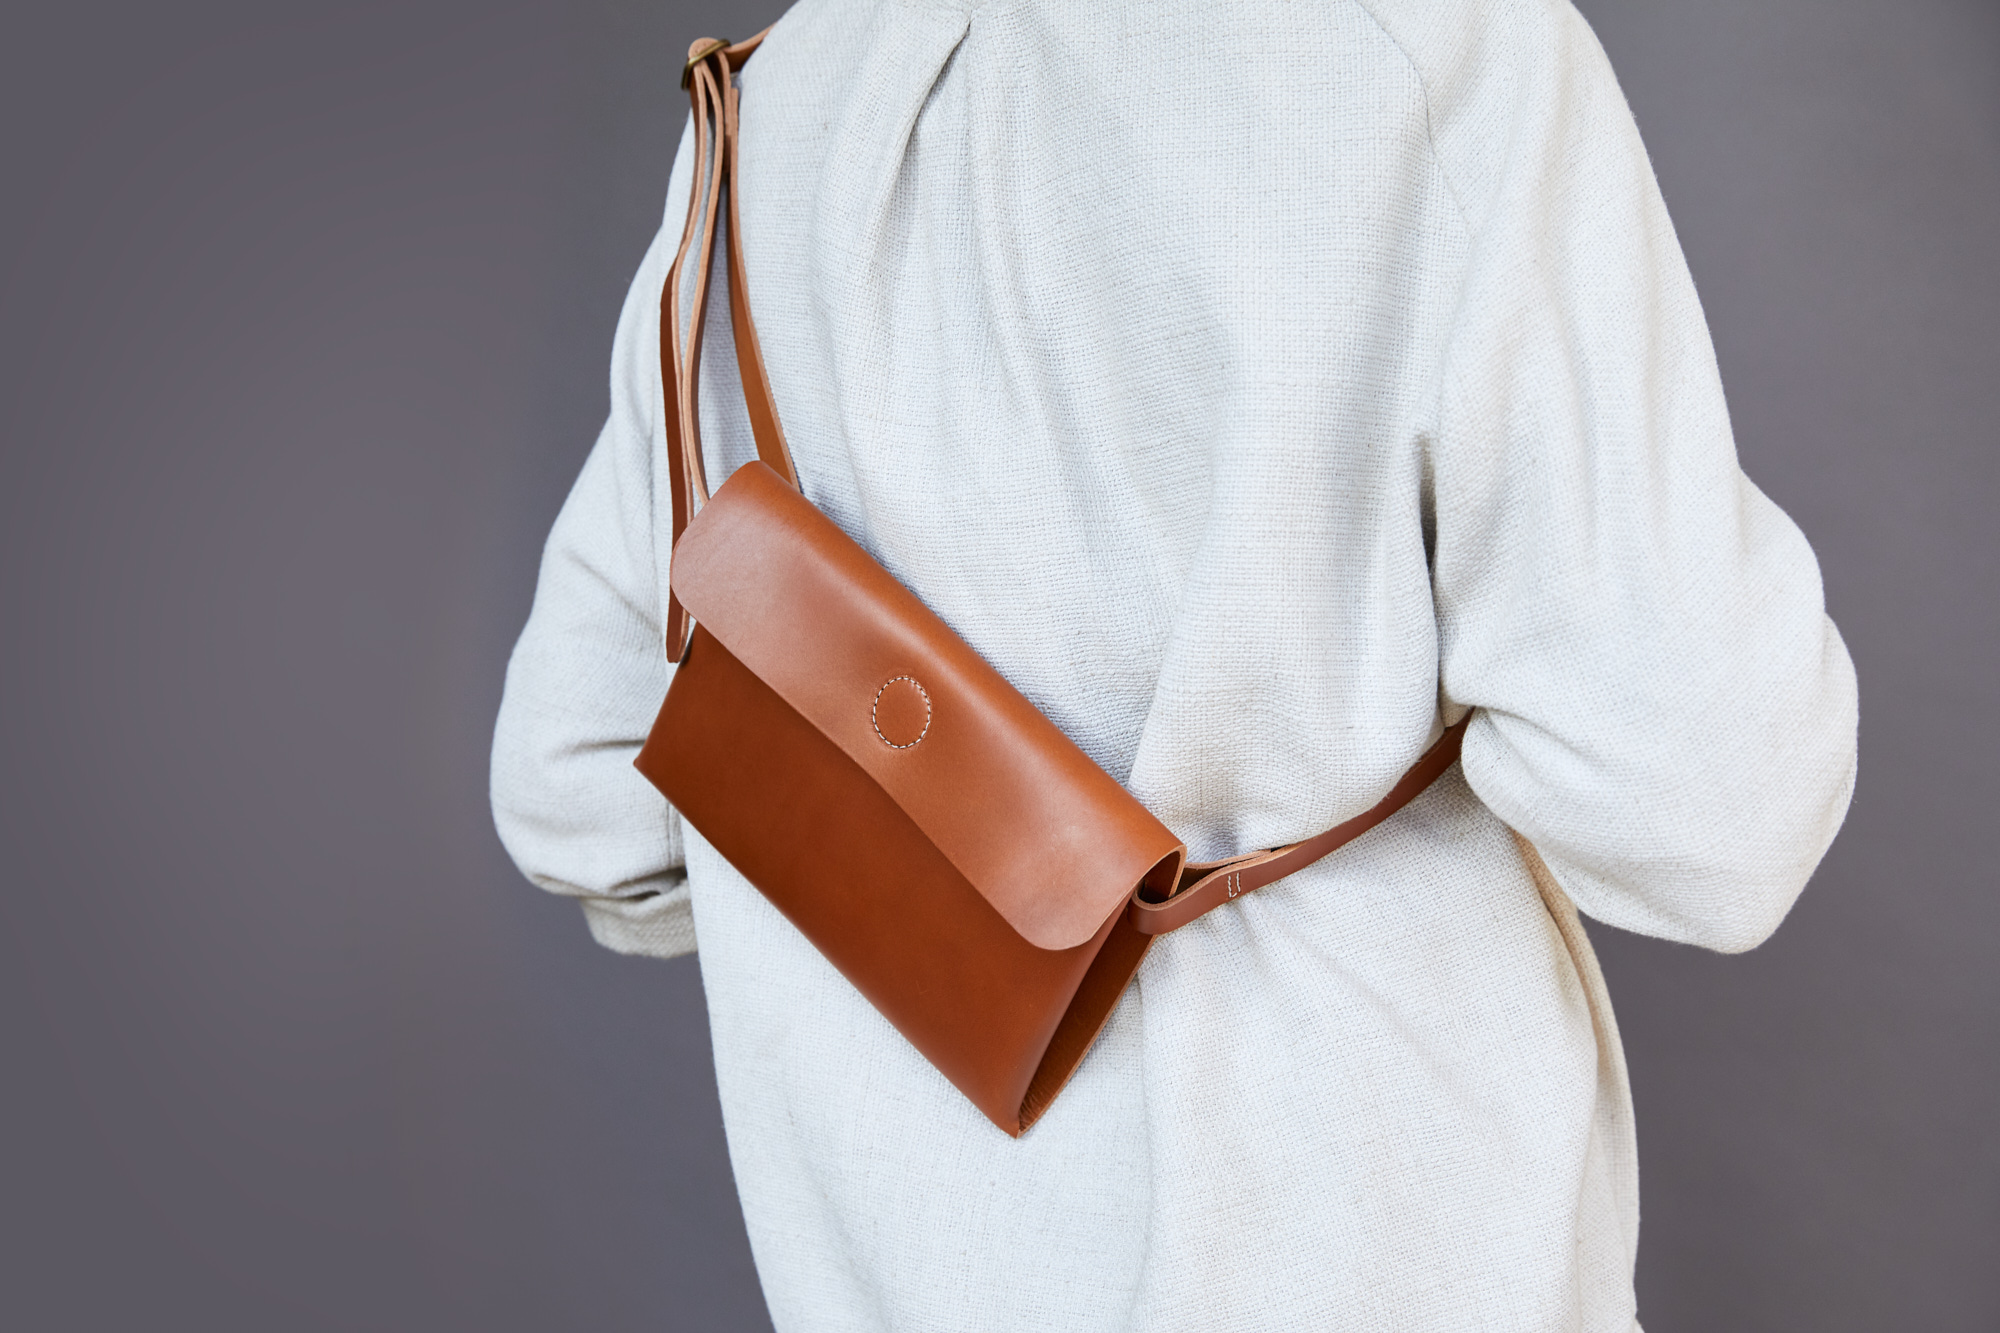 Small handbag by Studio Rosanne Bergsma